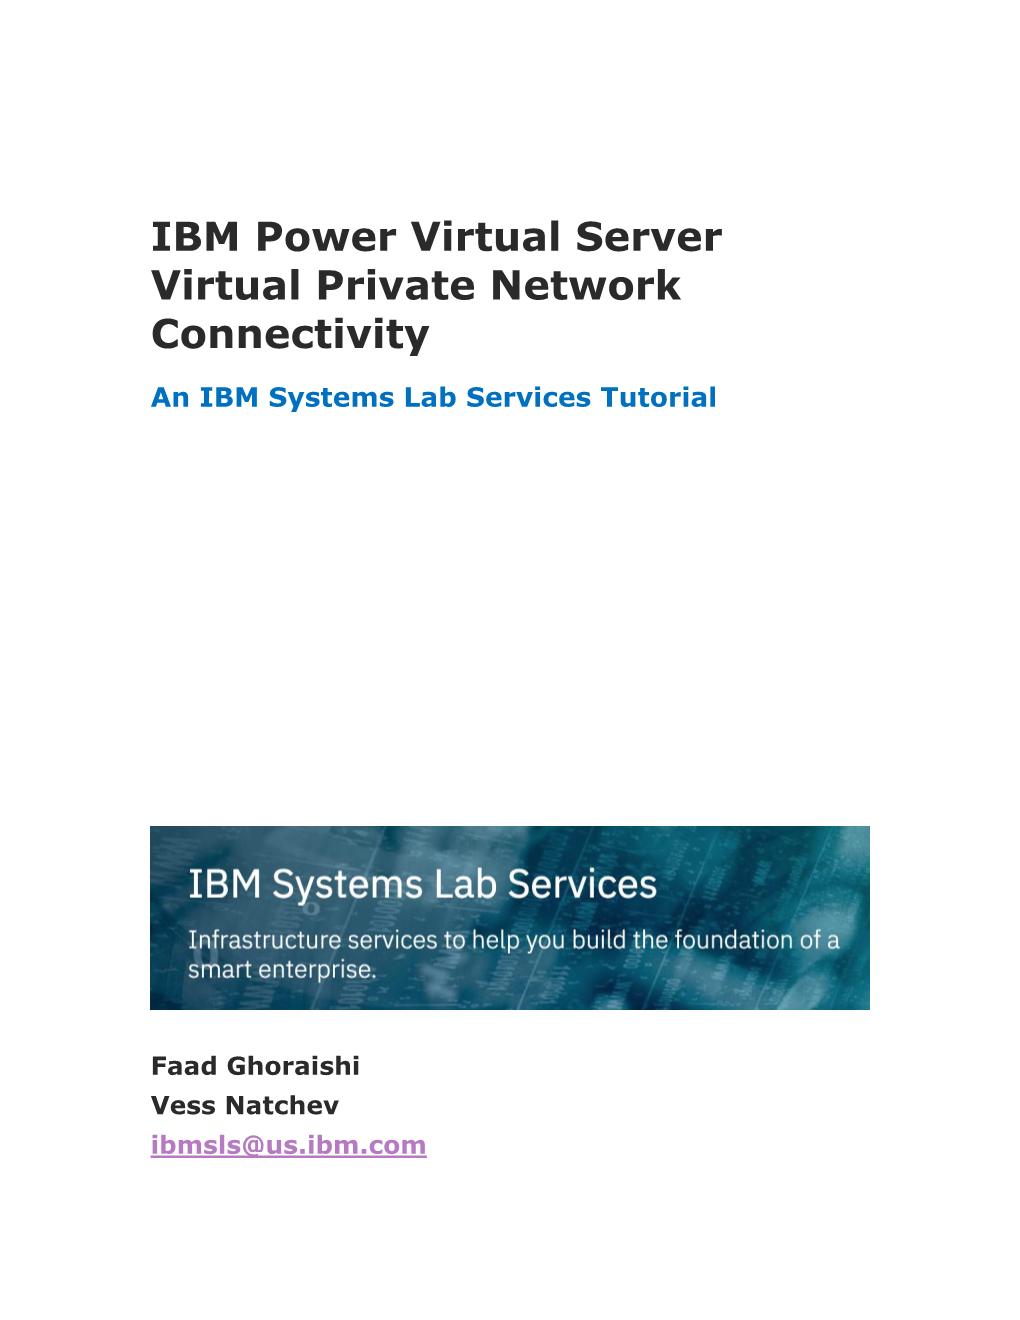 IBM Power Virtual Server Virtual Private Network Connectivity